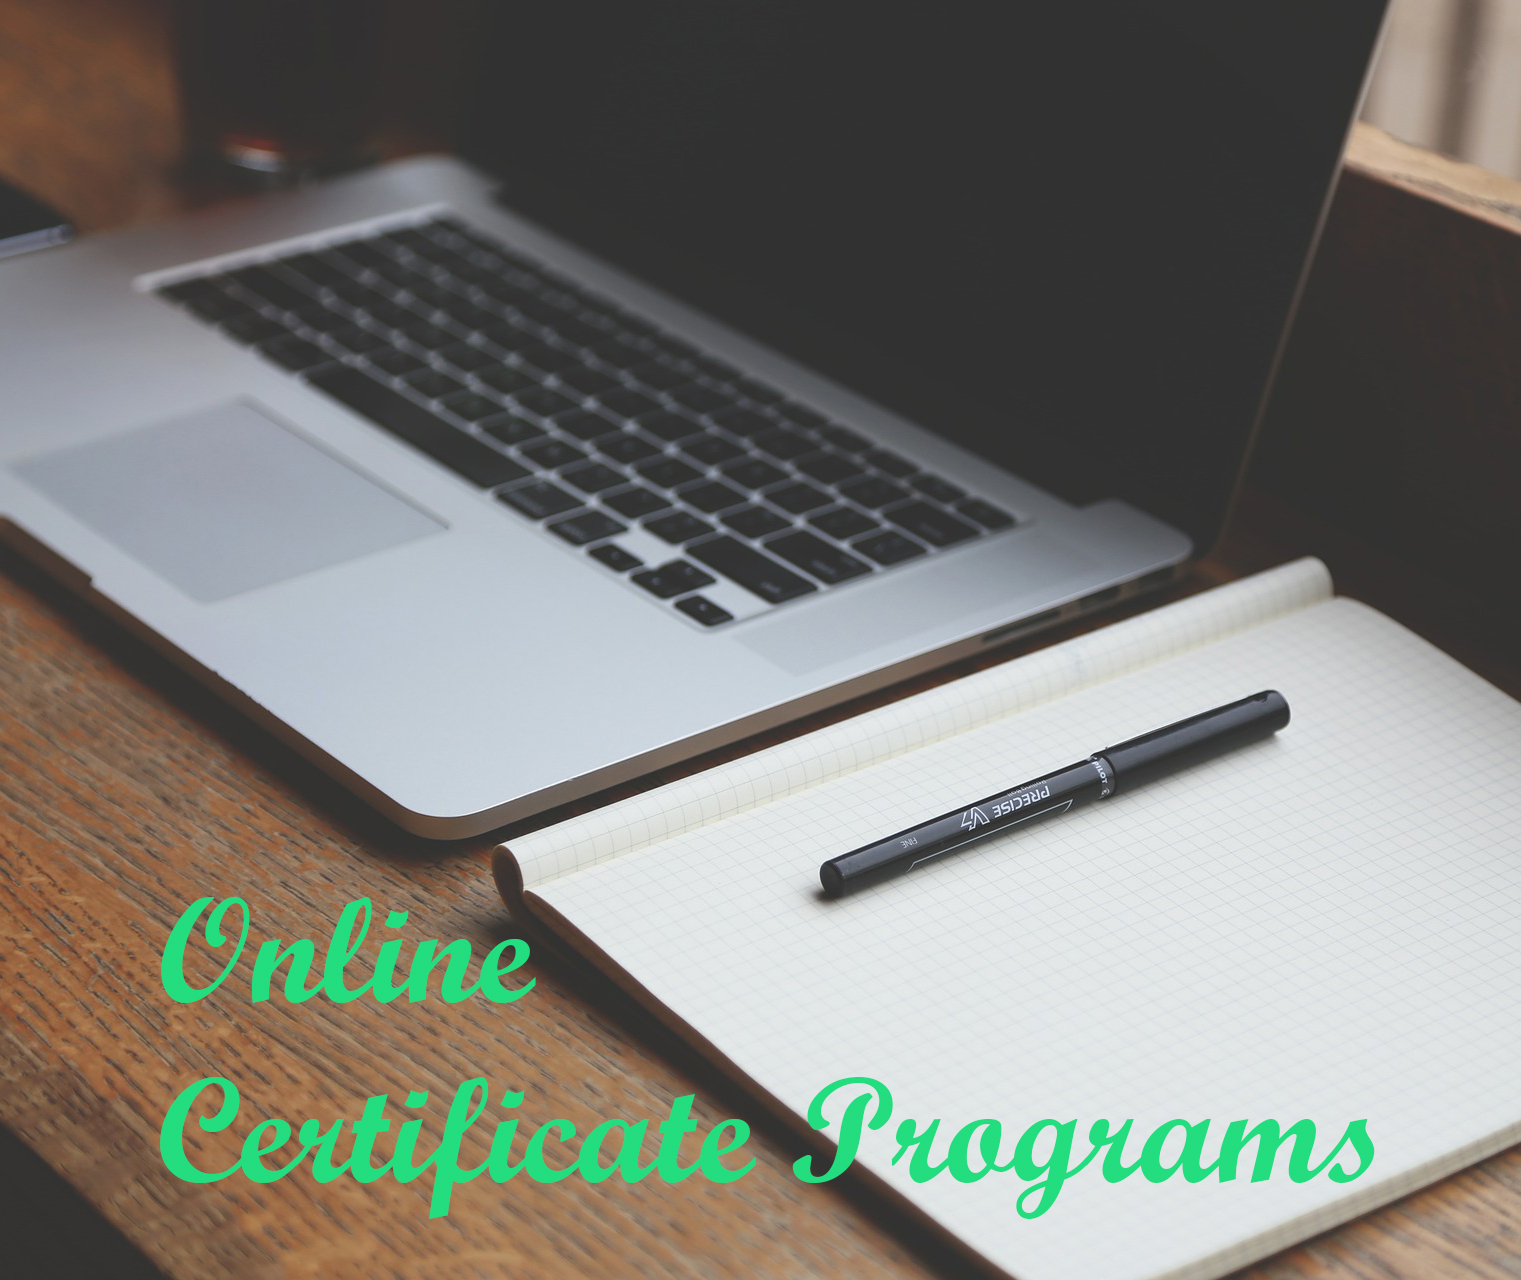 uploads/category/Online Certificate Programs